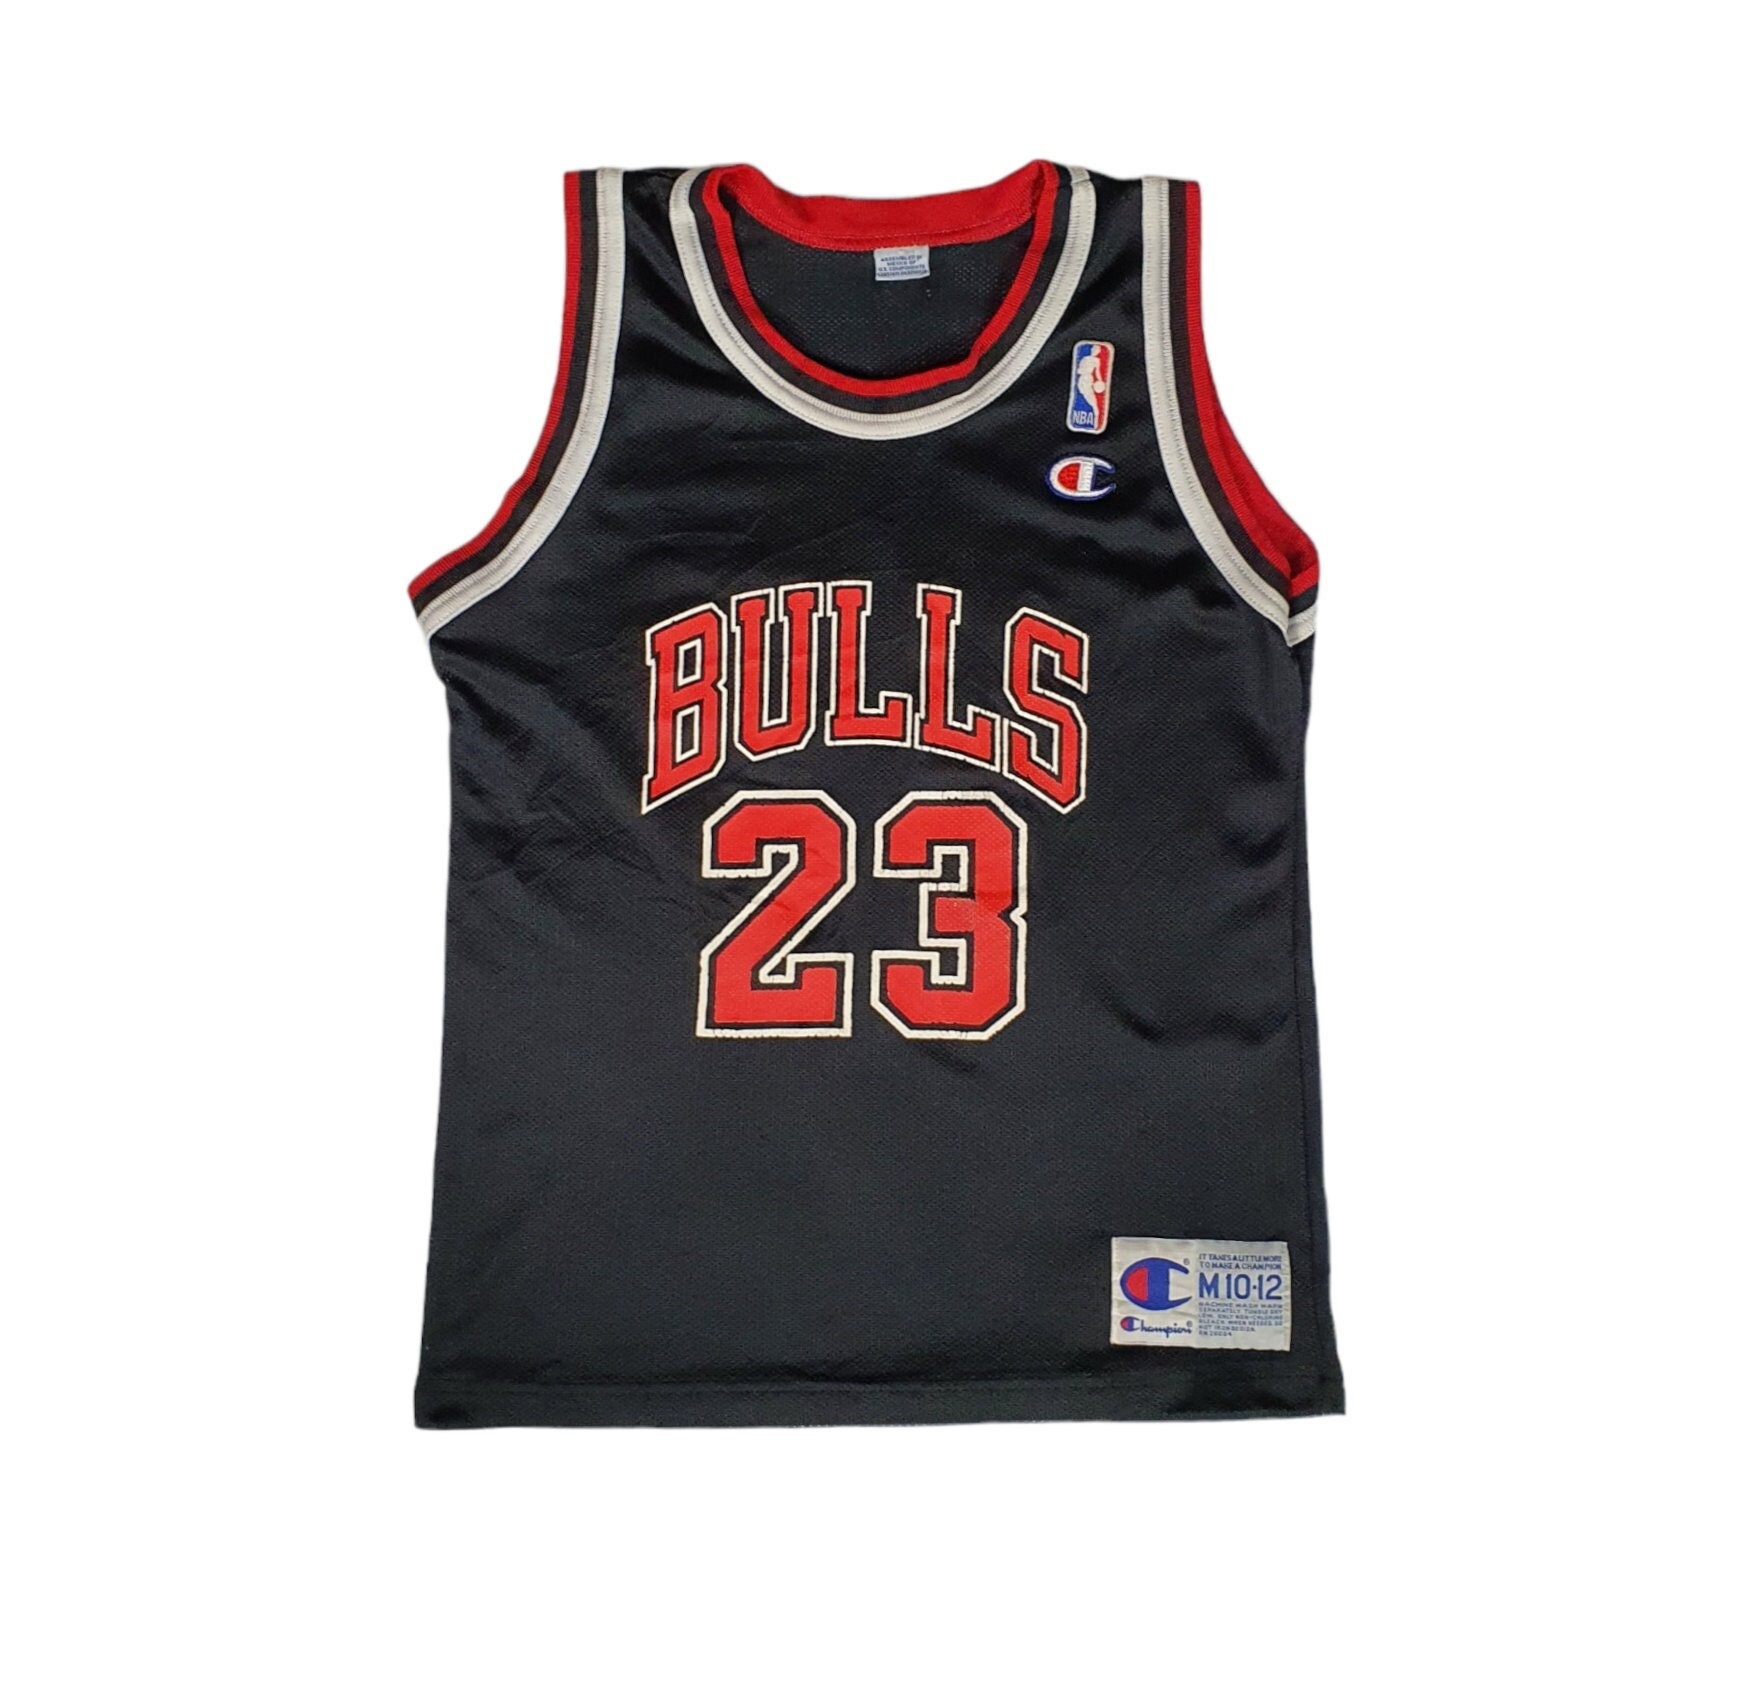 Custom Basketball Jerseys 91 33 23 Pippen Rodman T Shirts Have